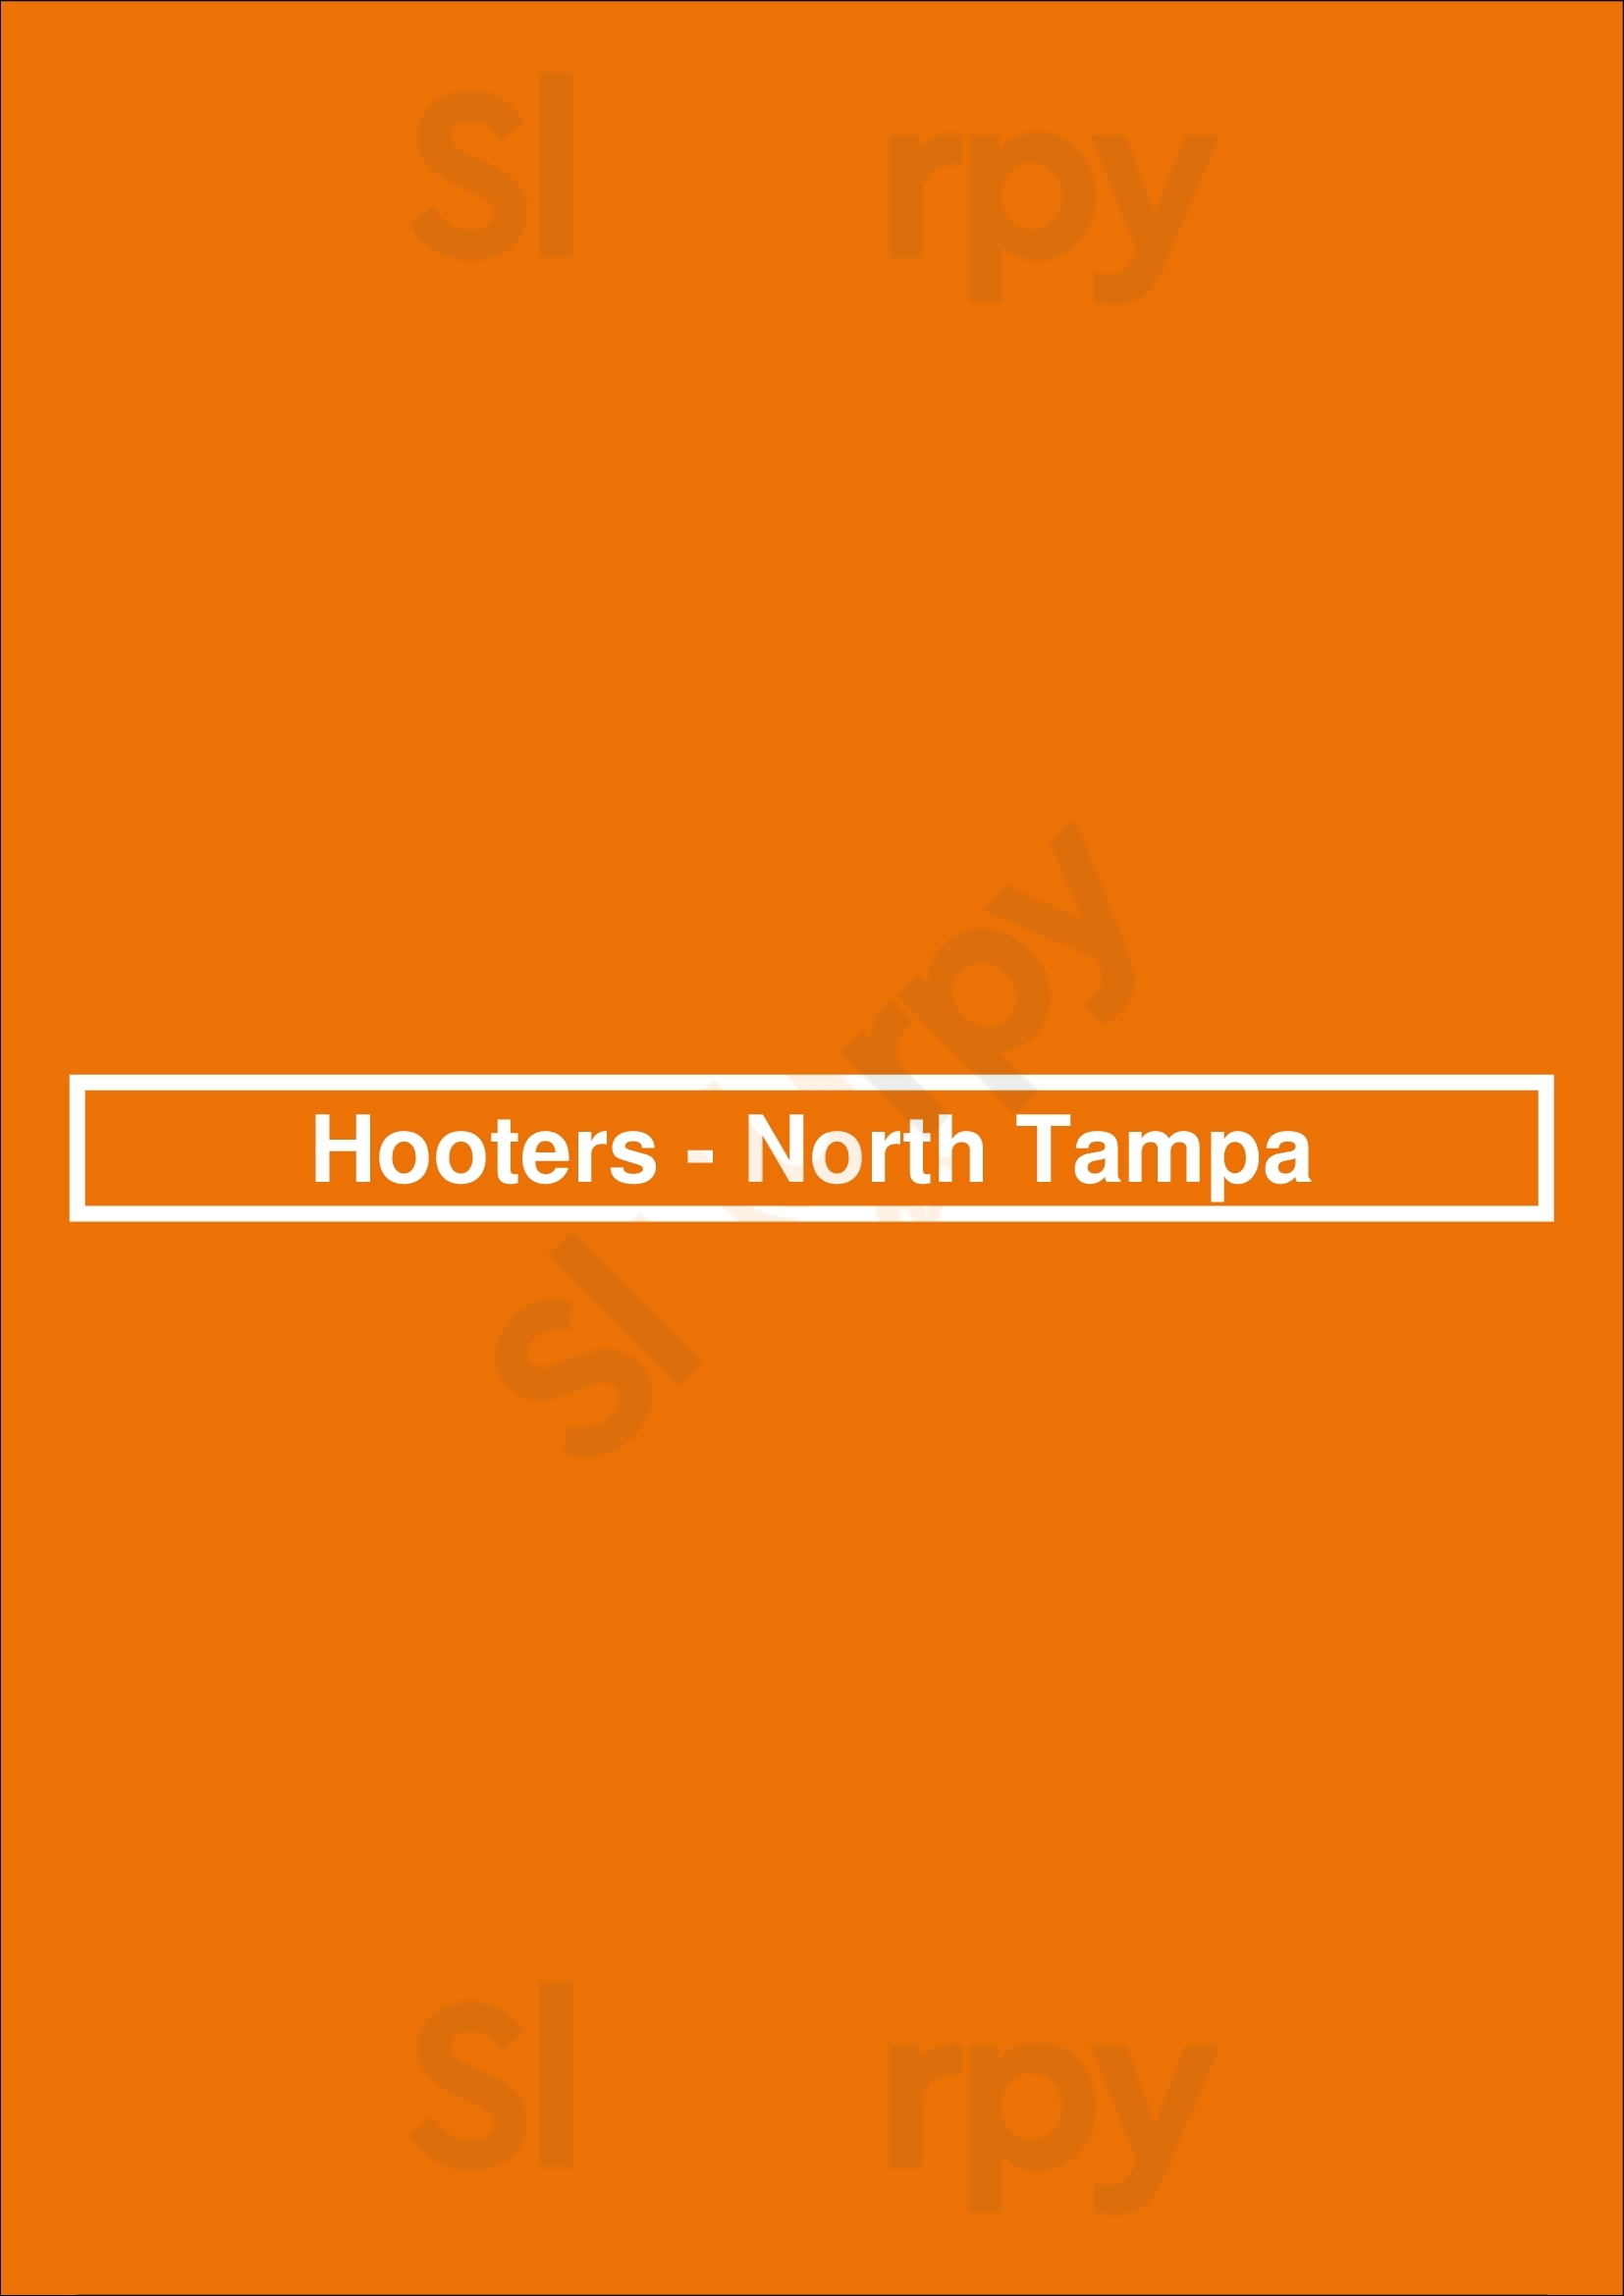 Hooters - North Tampa Tampa Menu - 1